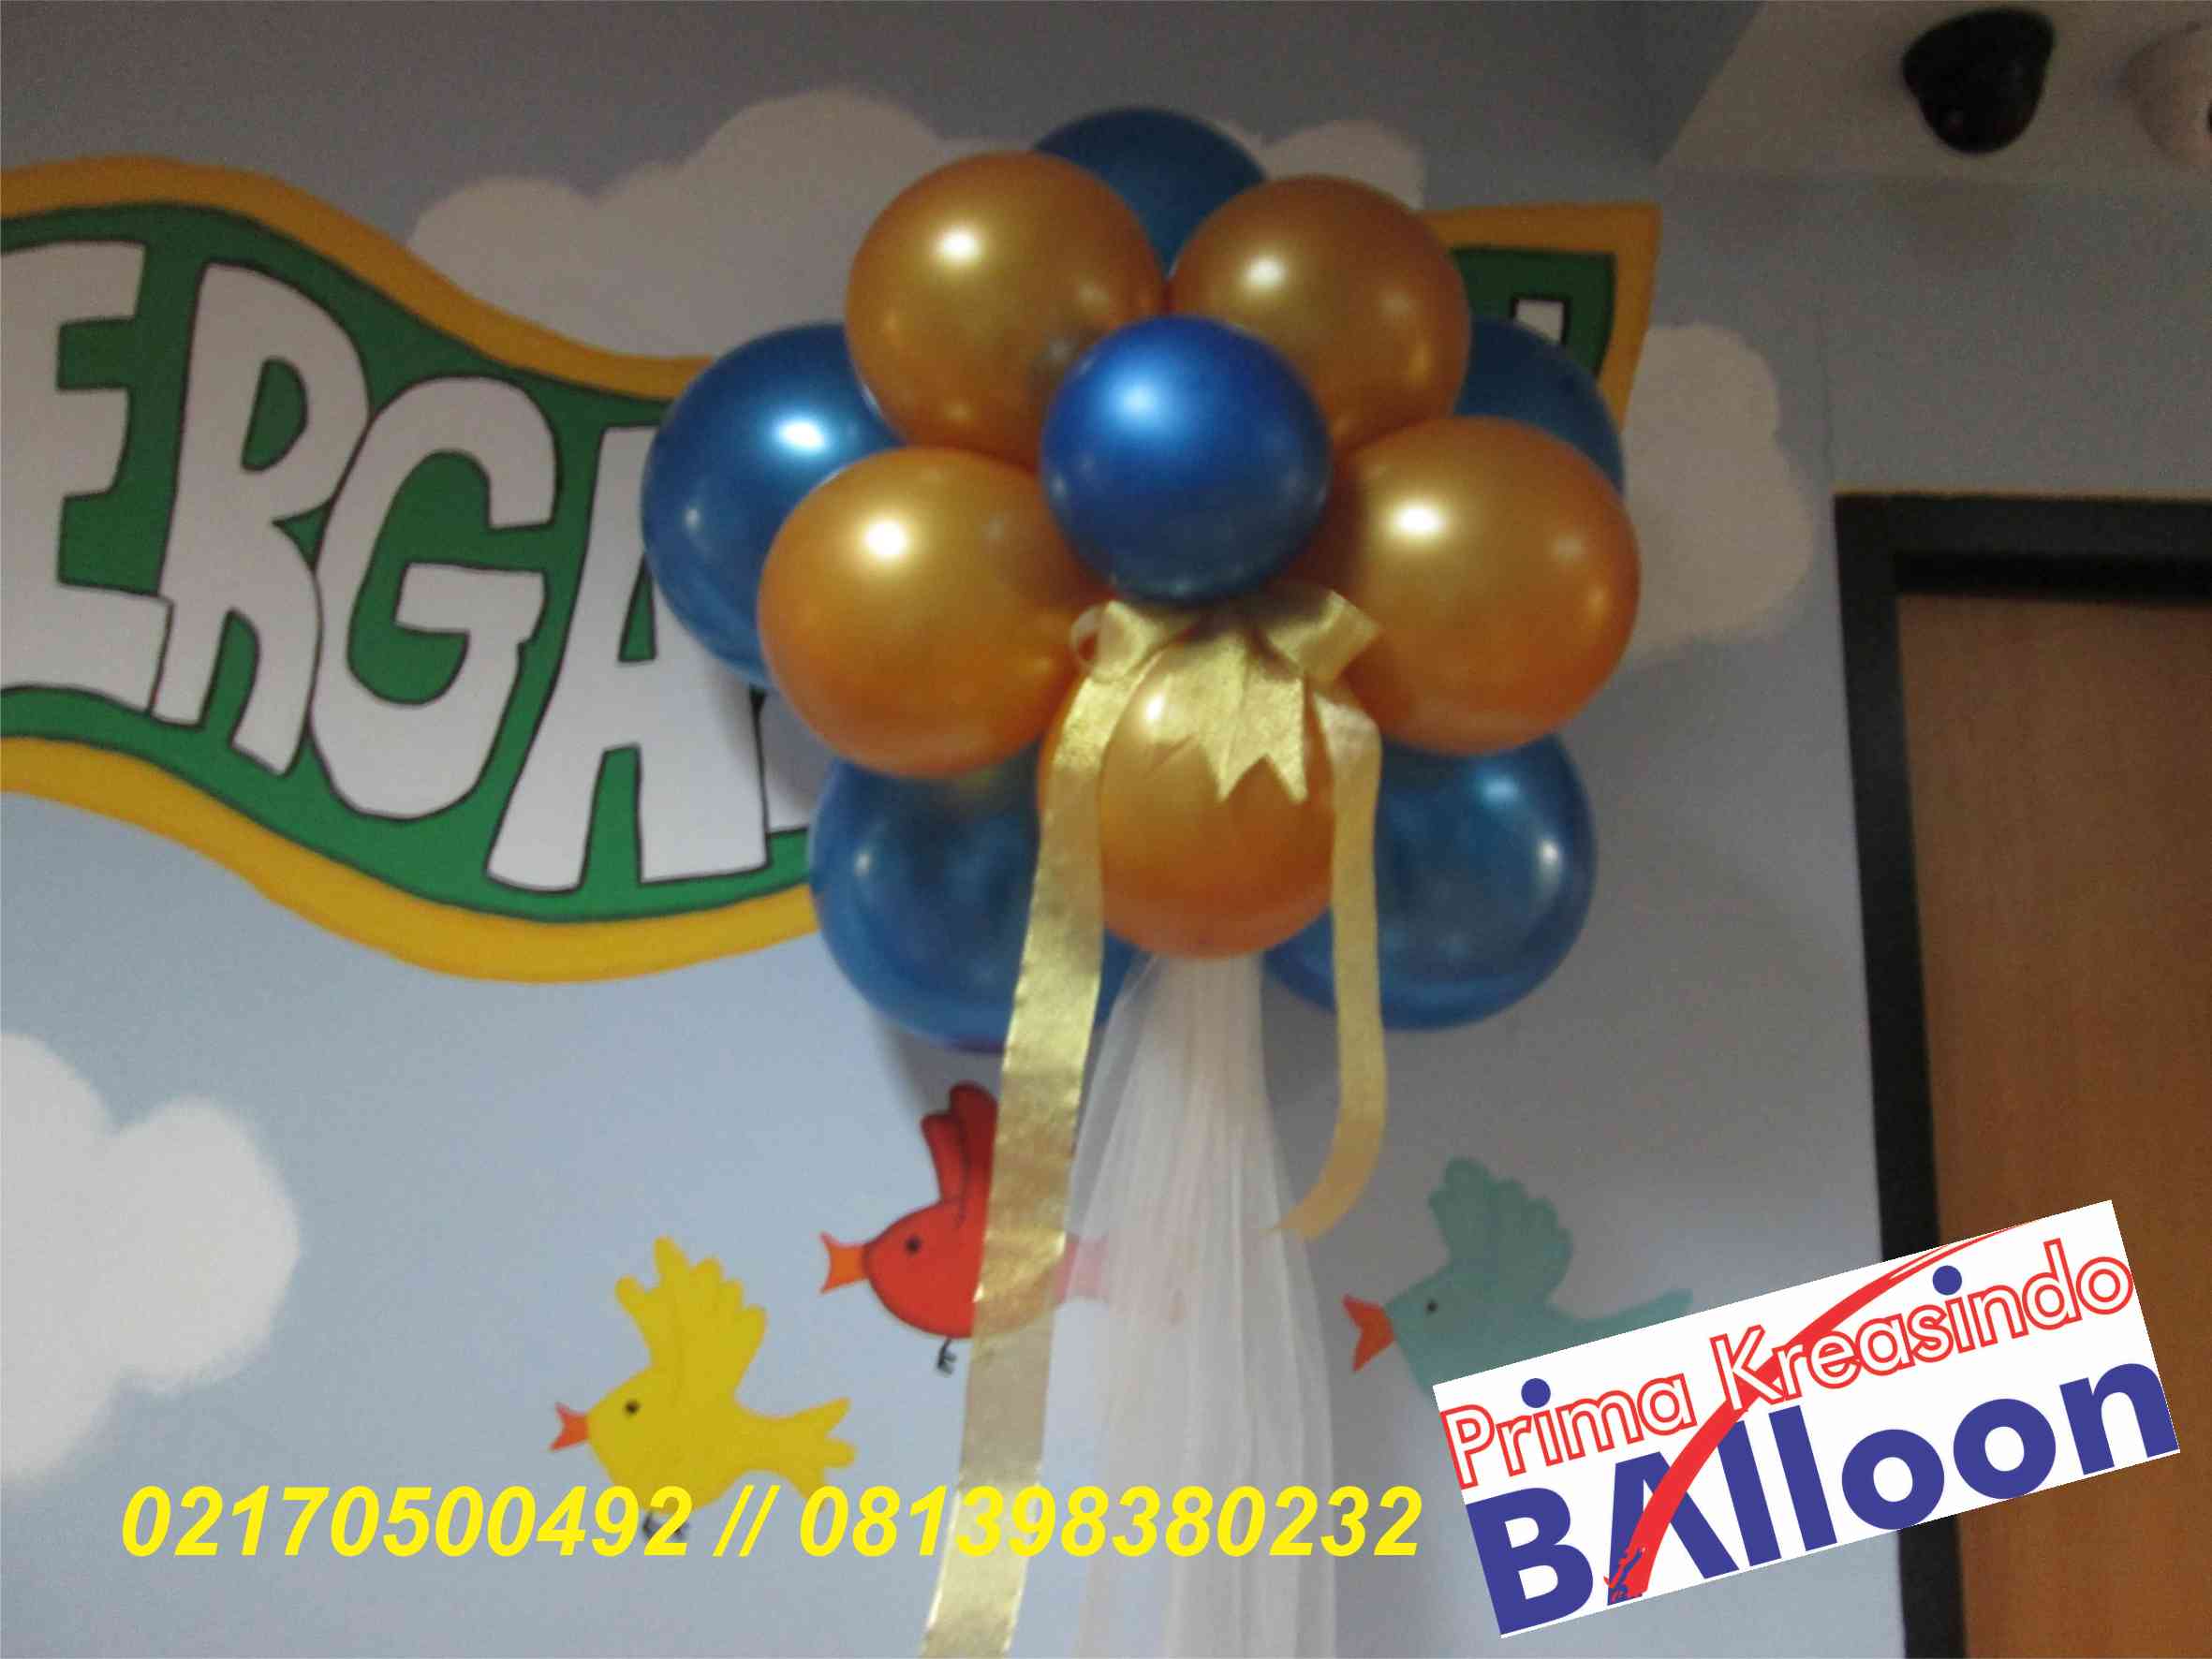  Dekorasi balon dekorasi styrofoam Prima Kreasindo Balon 